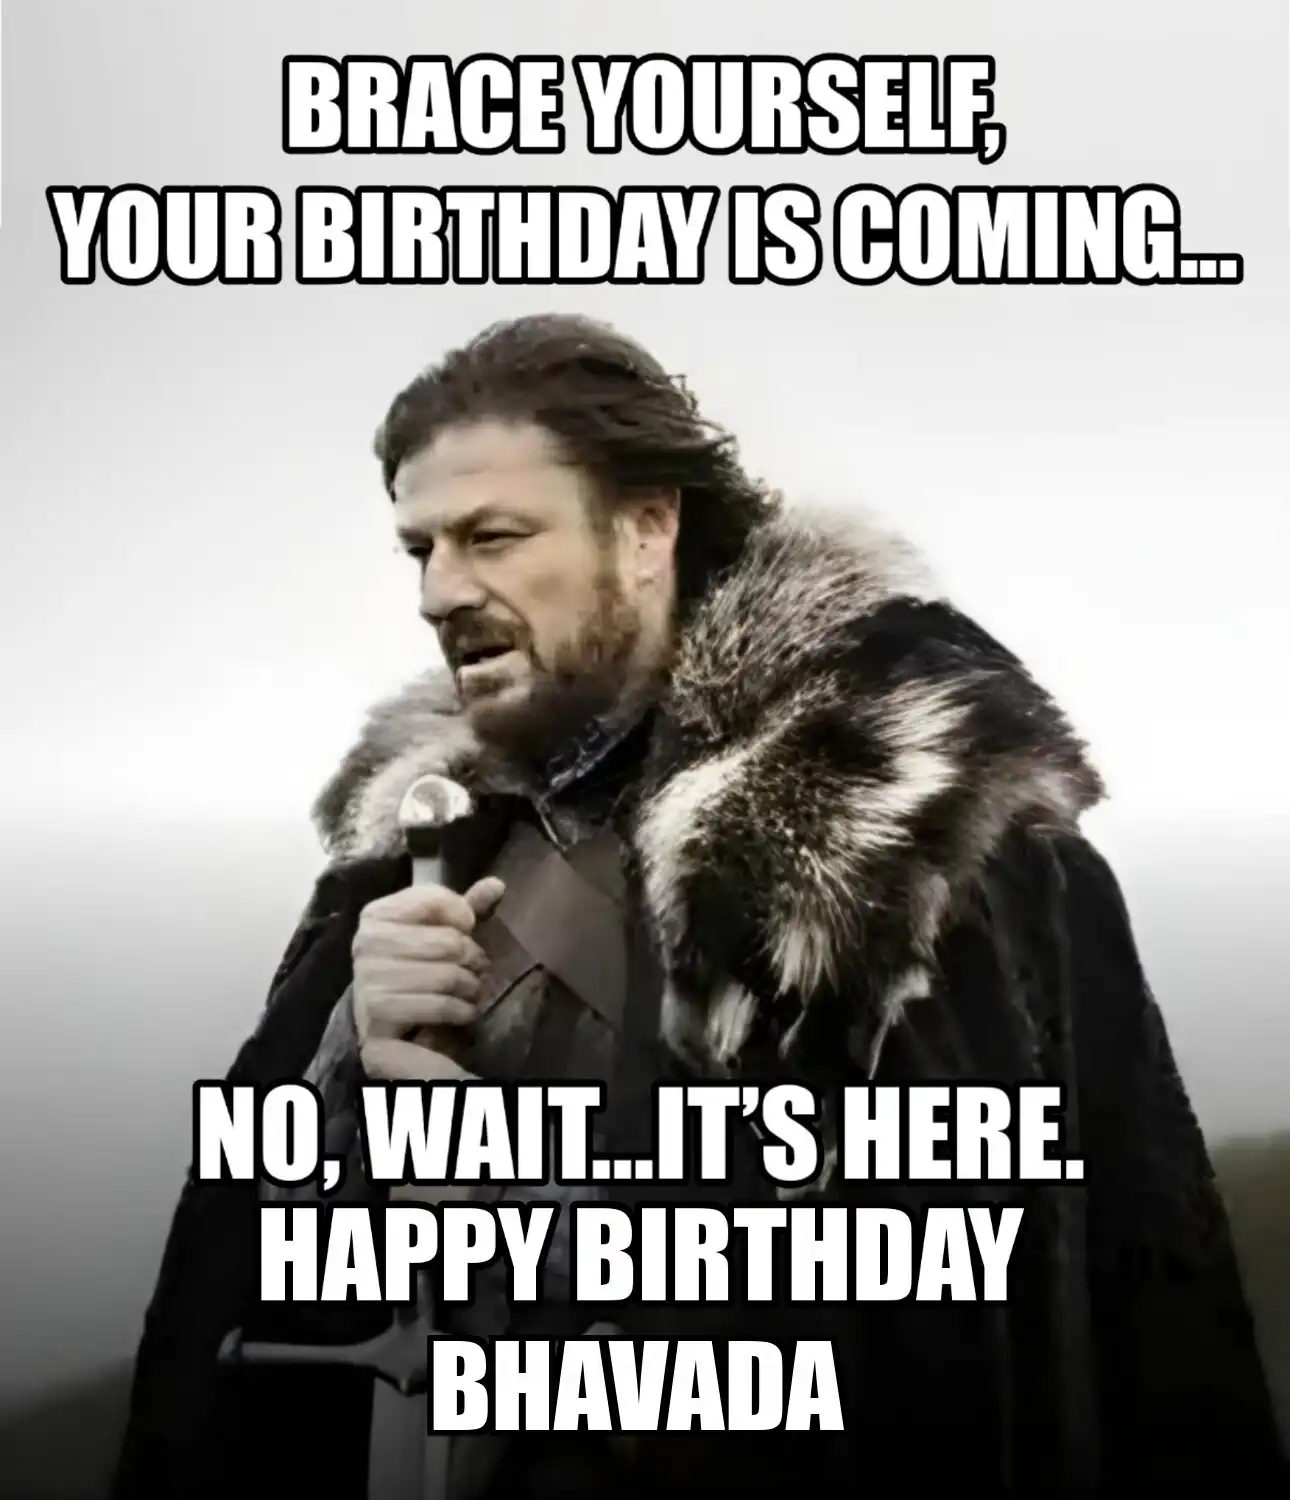 Happy Birthday Bhavada Brace Yourself Your Birthday Is Coming Meme